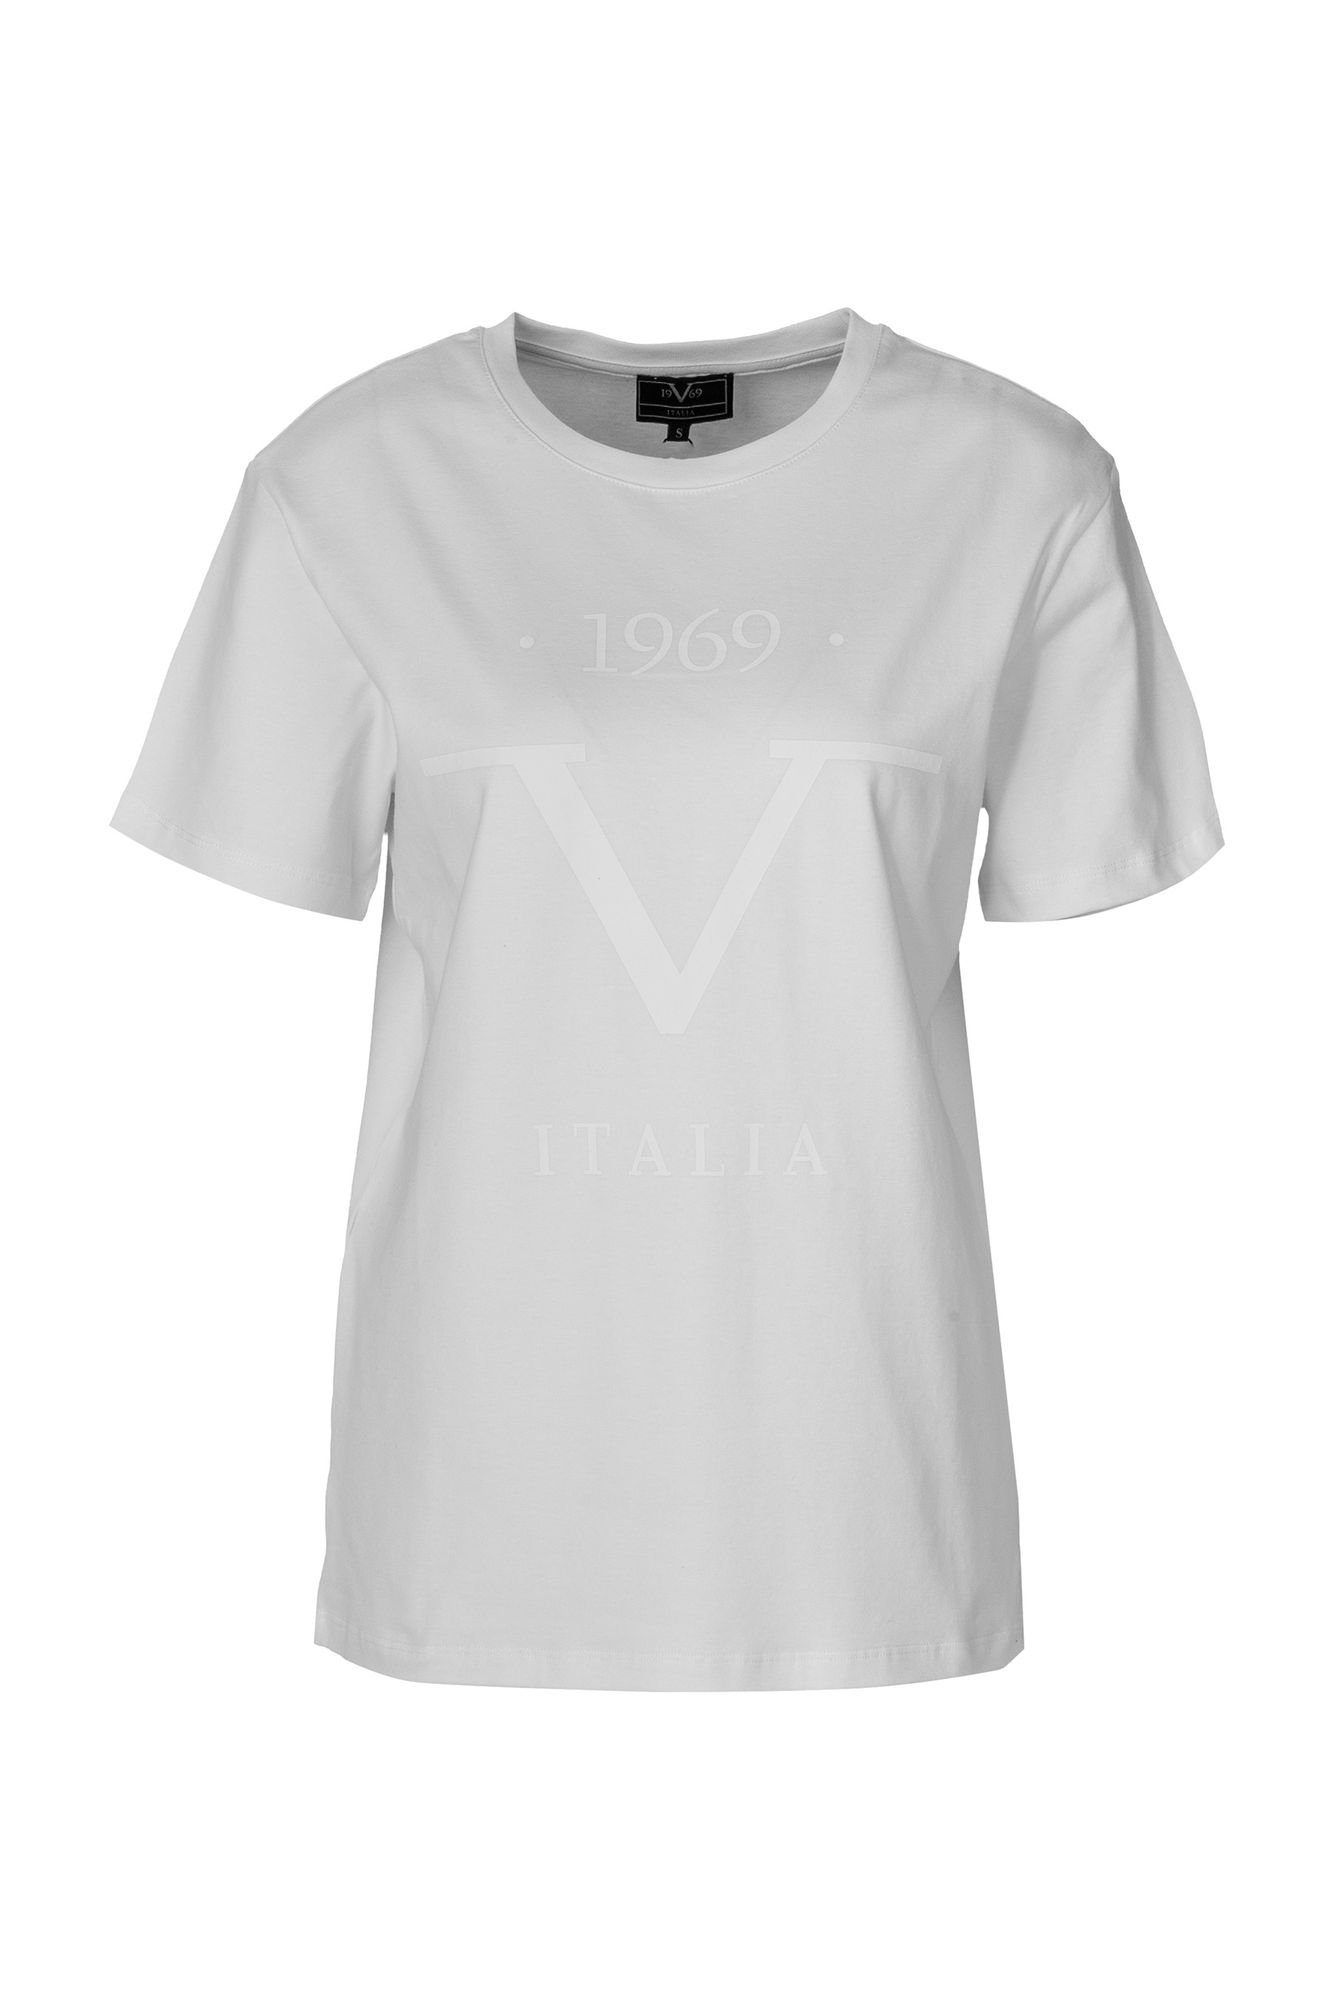 19V69 Italia by Versace T-Shirt Print Diego-033 mit